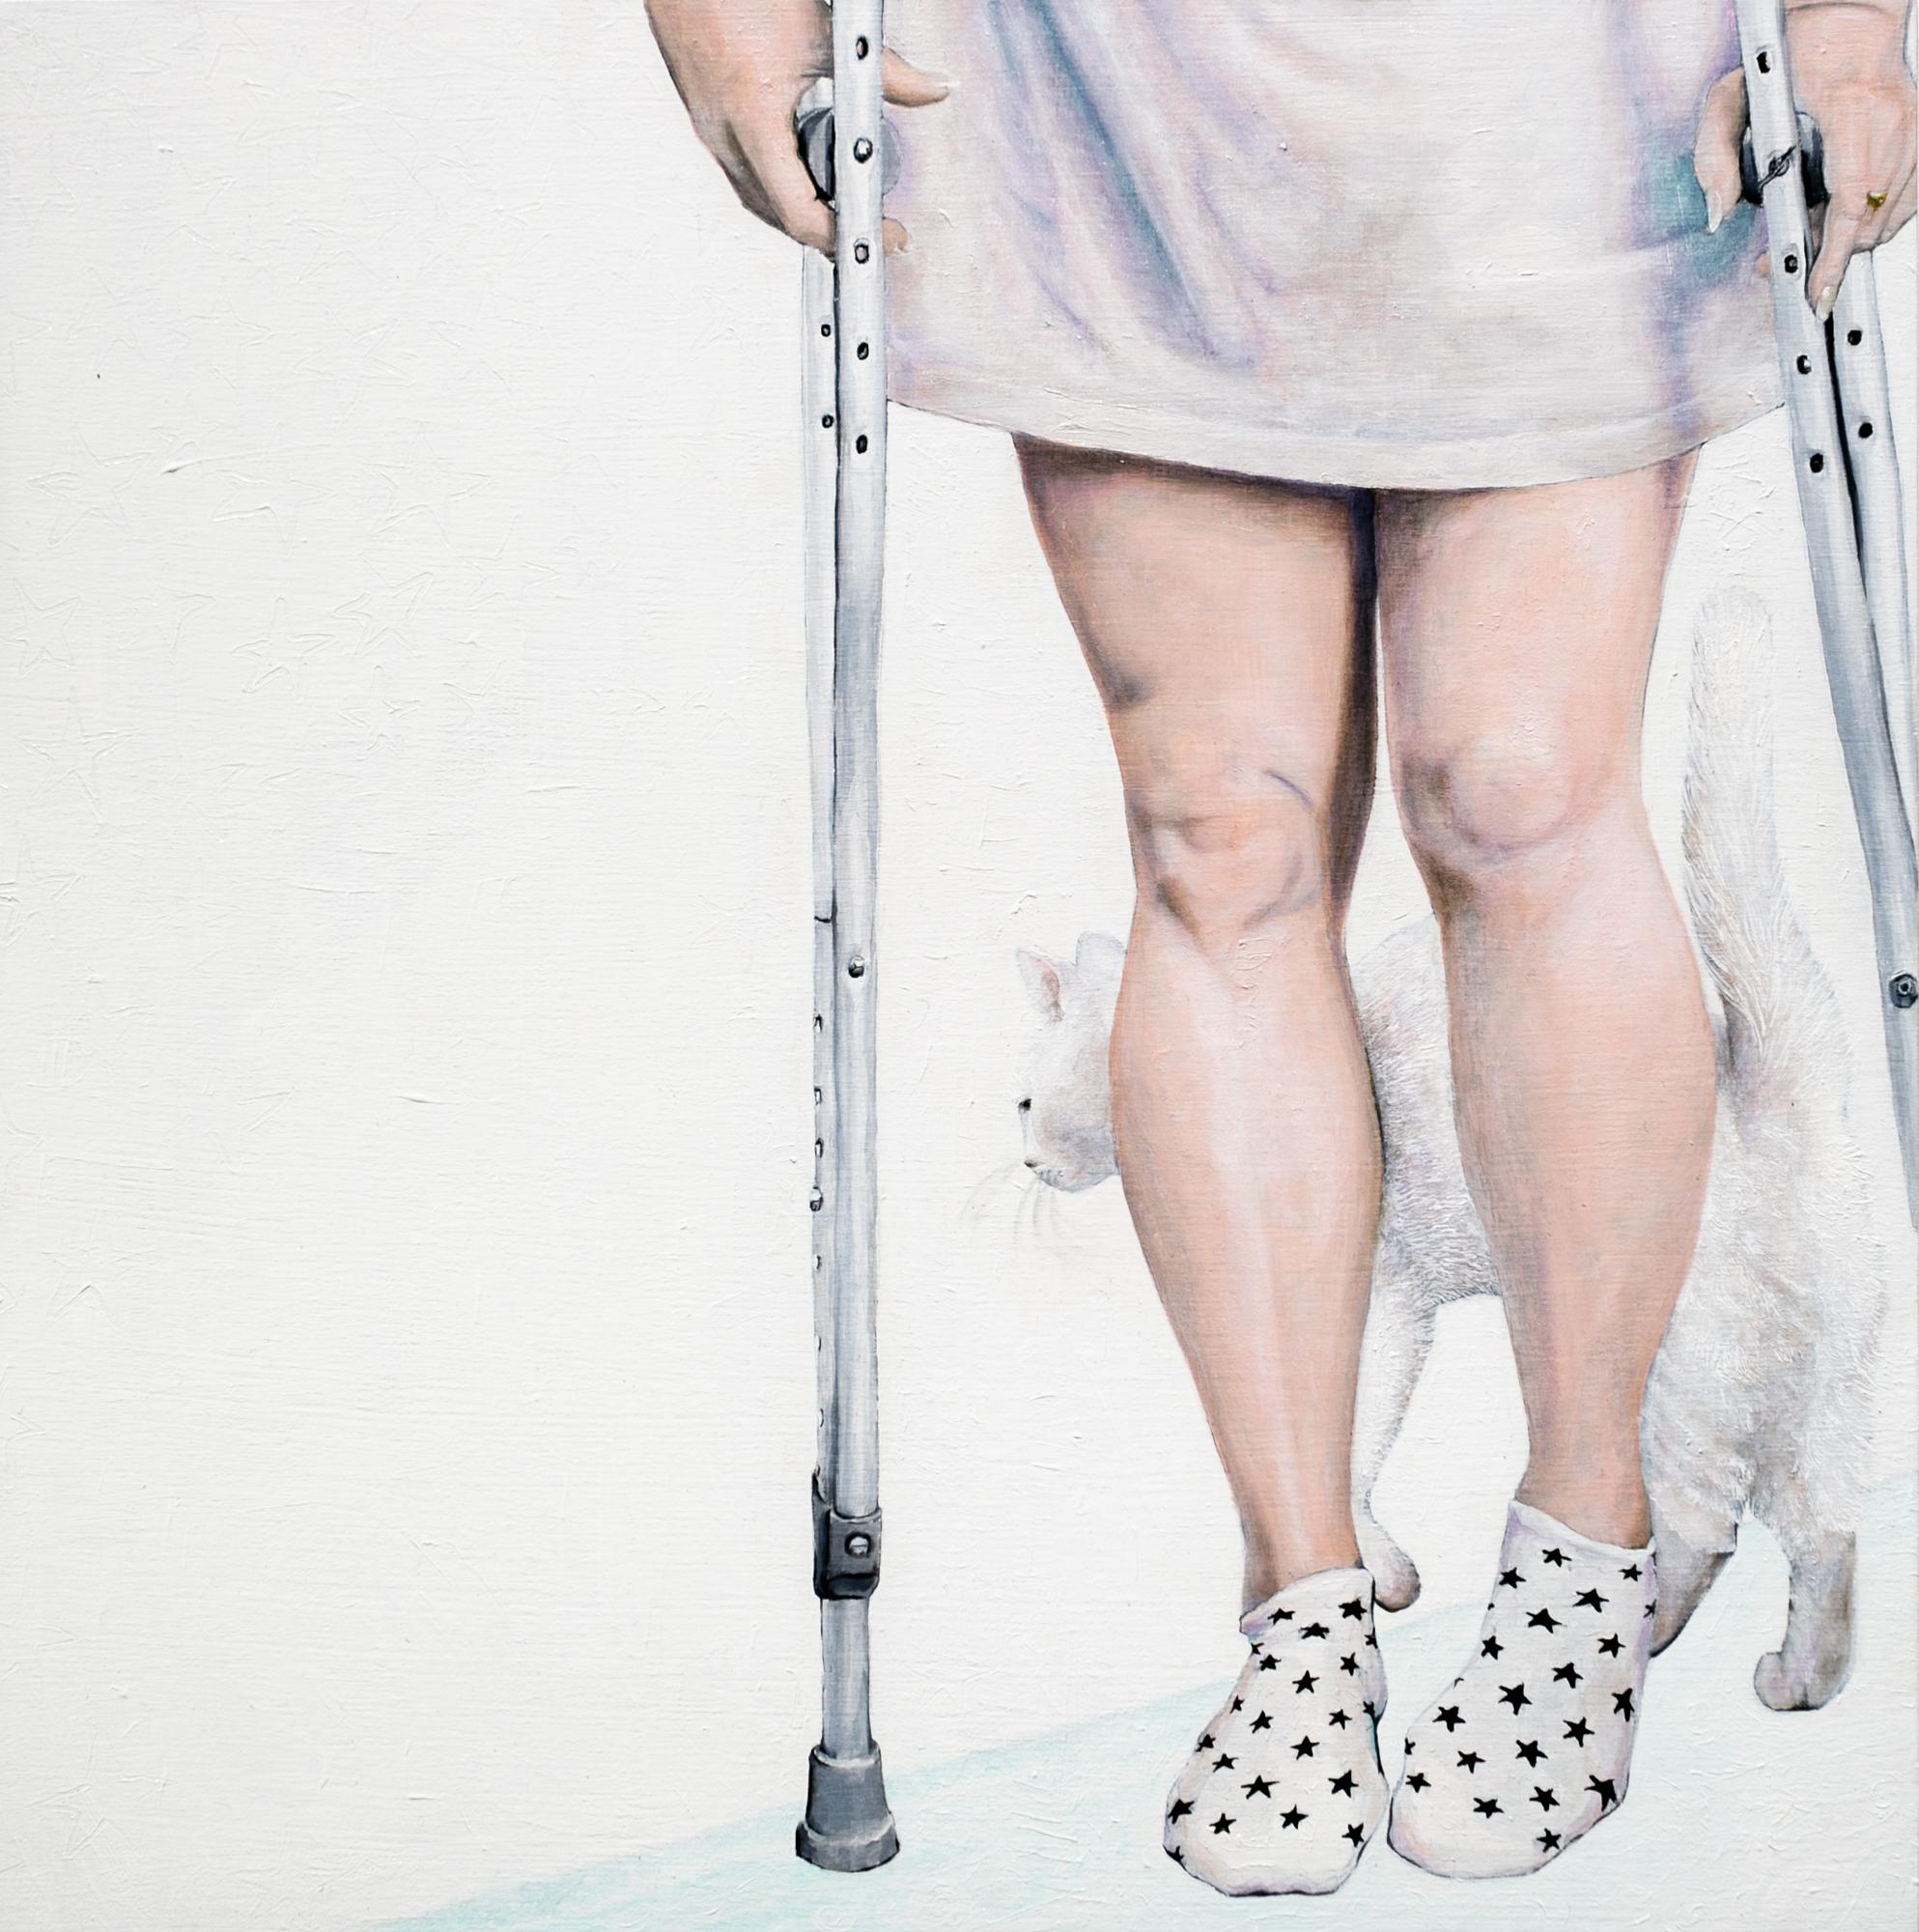 Lauren Rinaldi Portrait Painting - "Constant Convalescence", Figurative, Oil Painting, Cat, Legs, Crutches